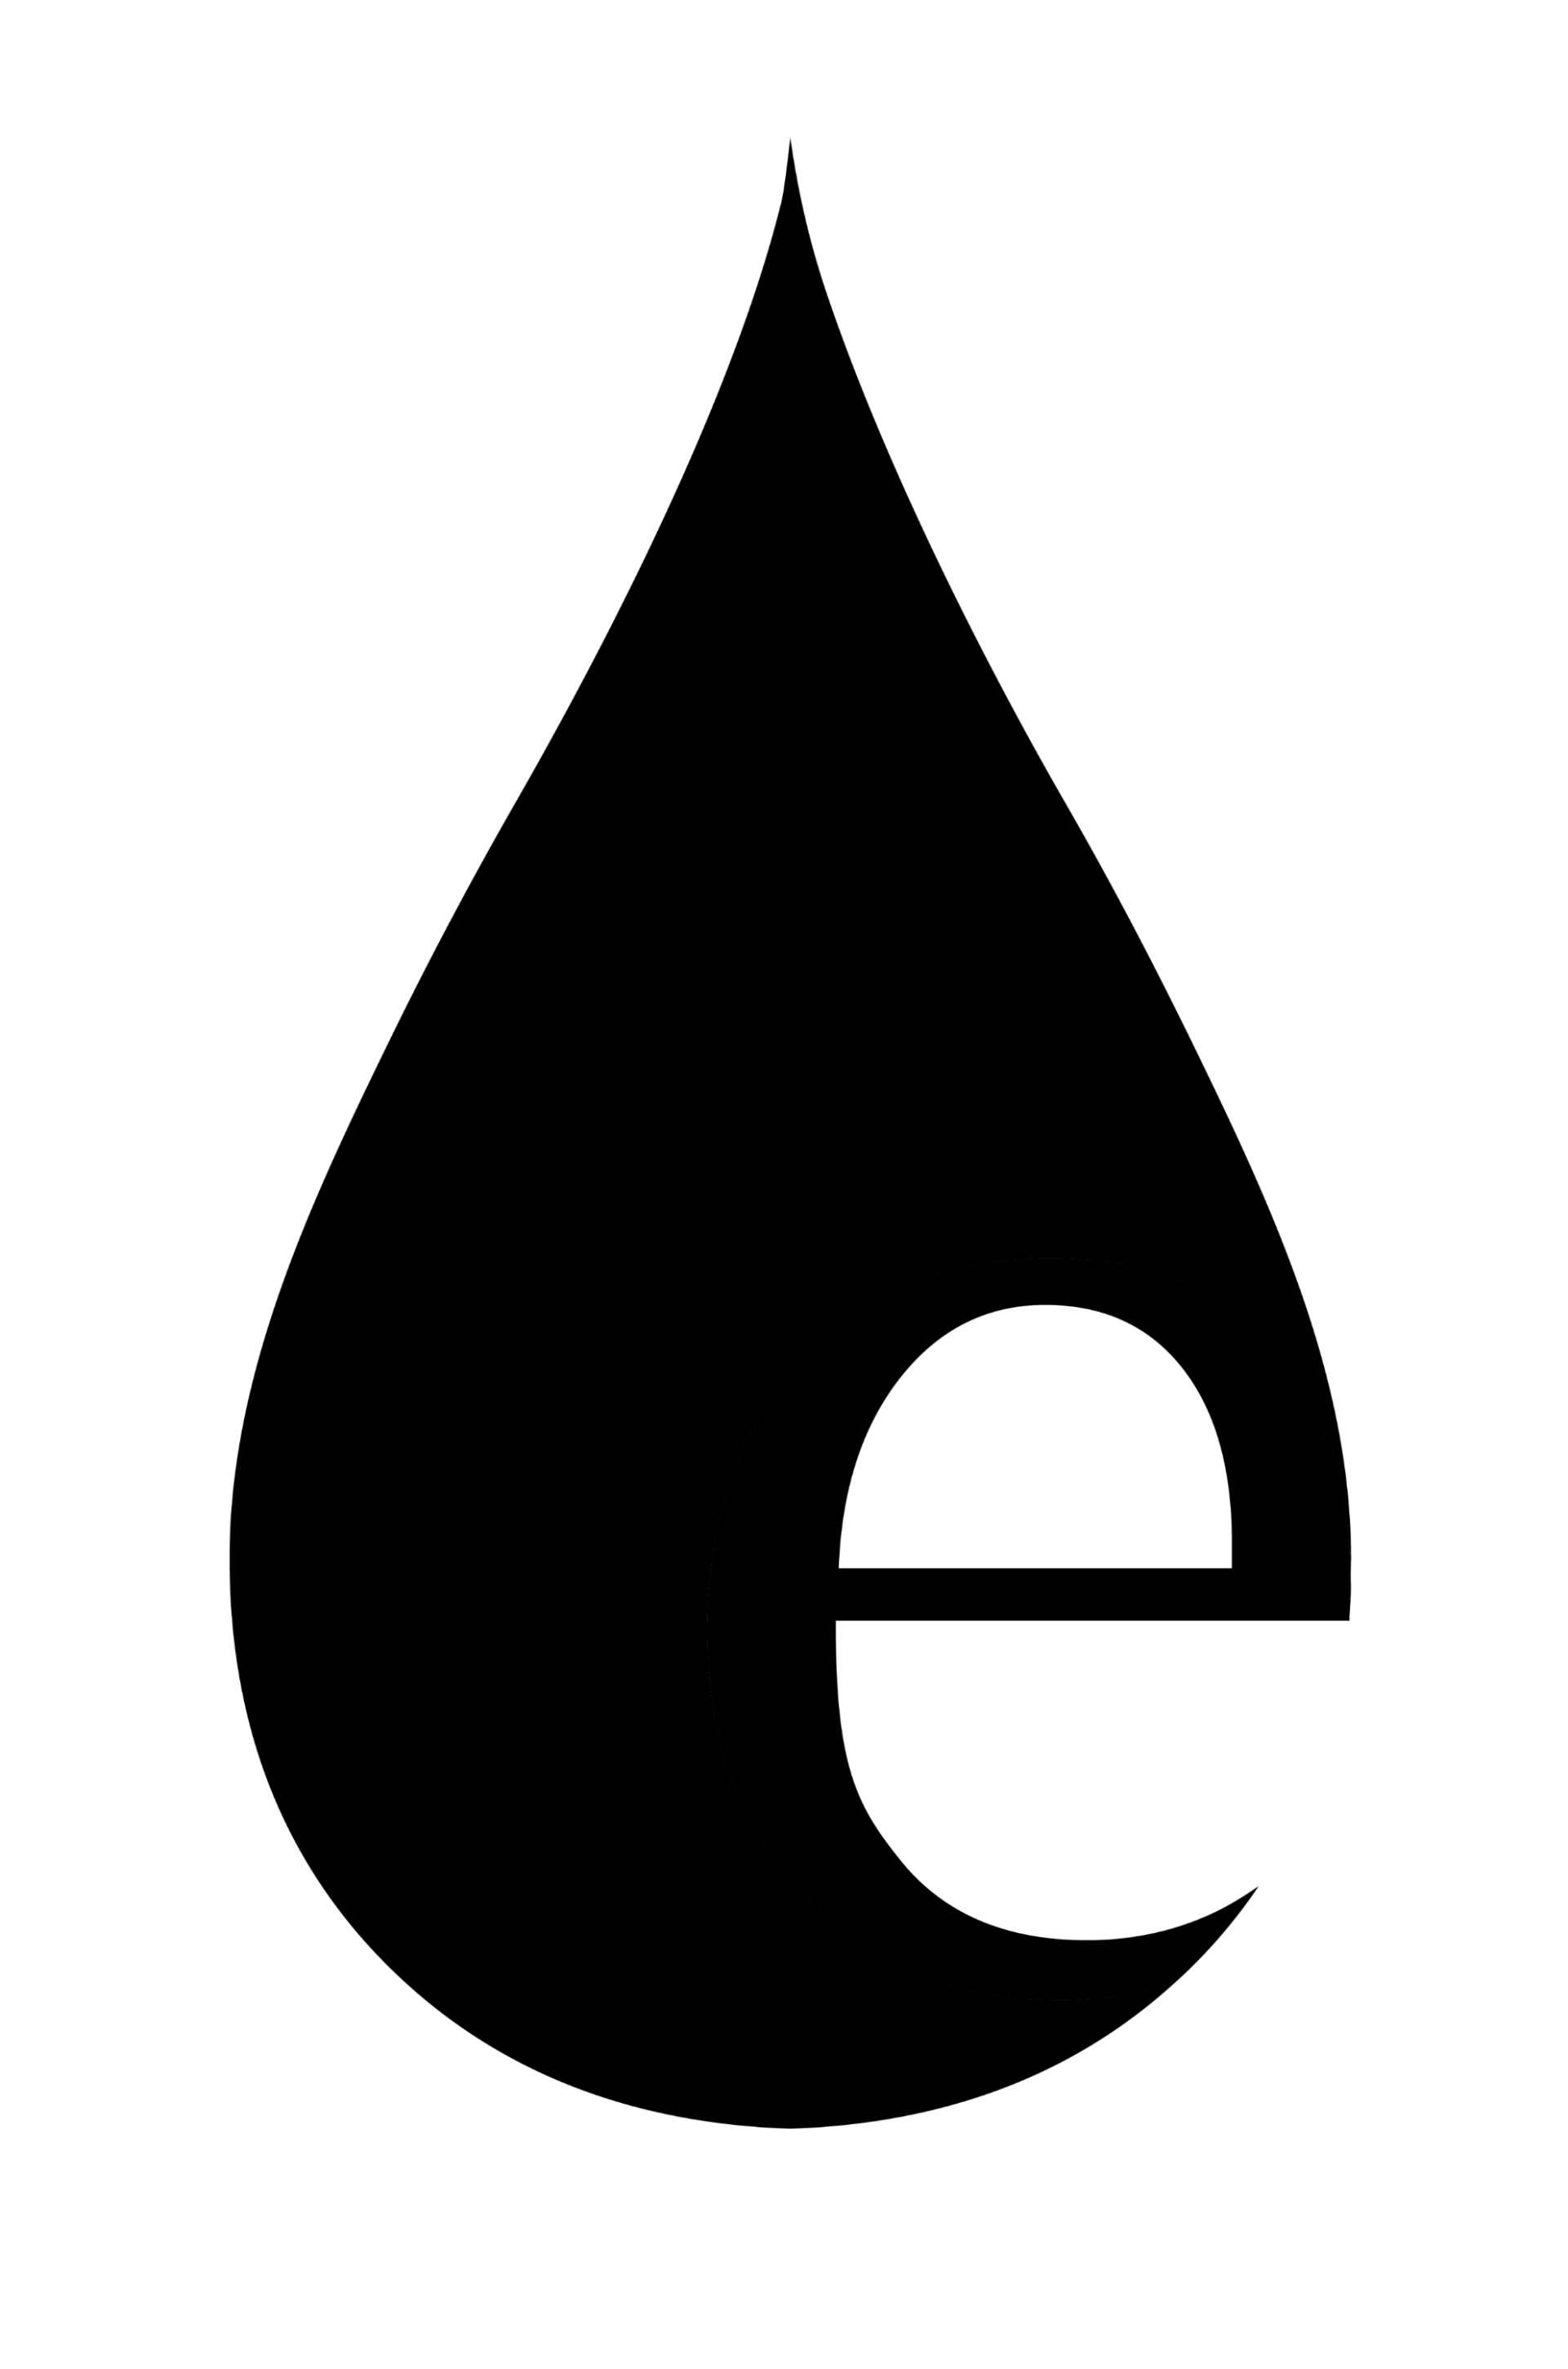 eltraderm logo3 0320 BLACK